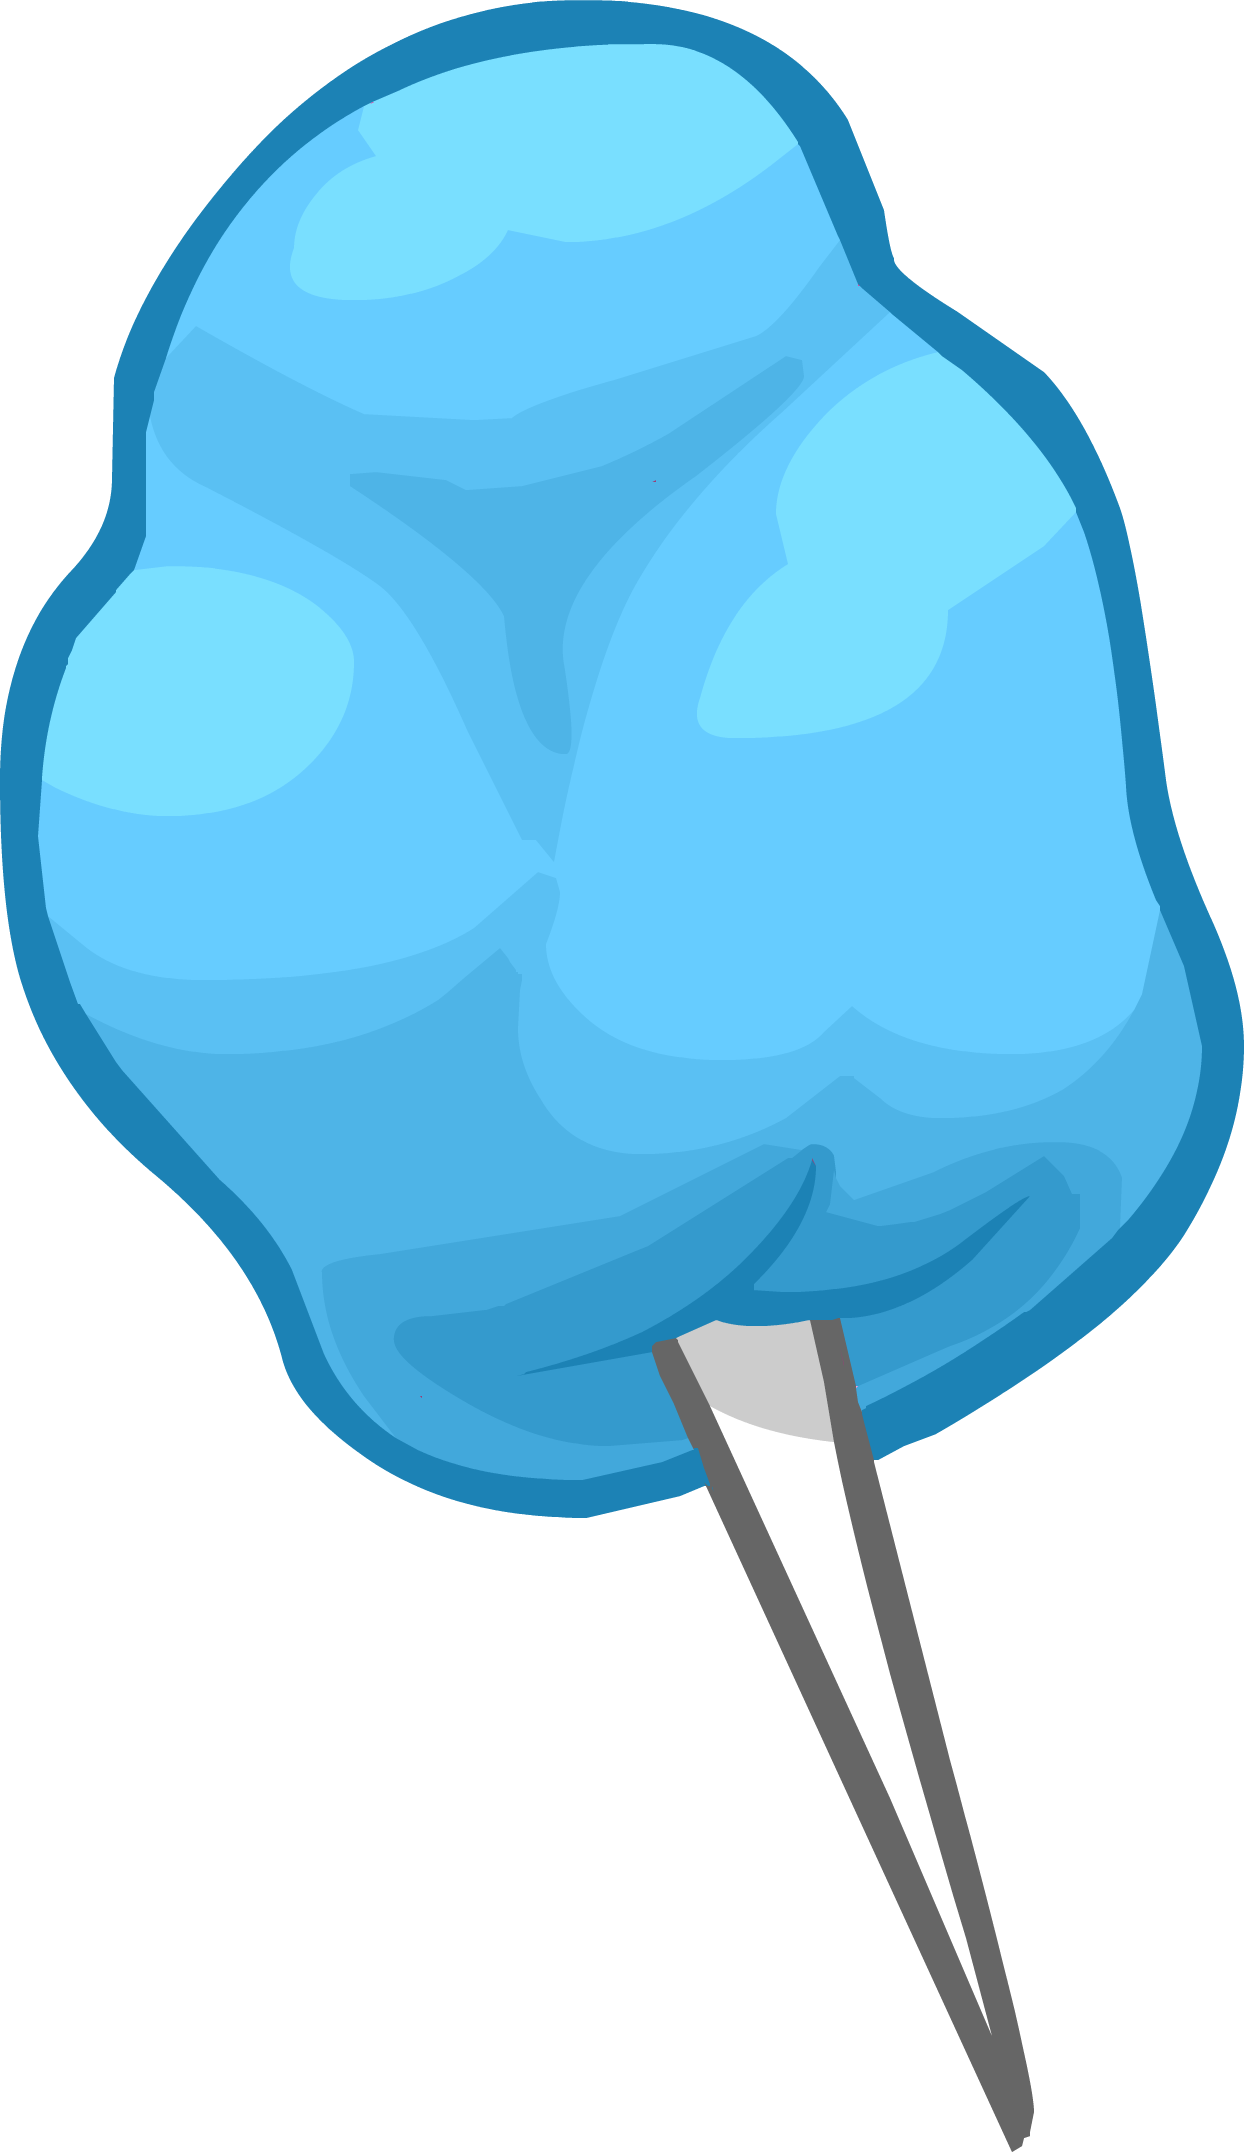 Universe clipart island. Image blue cotton candy